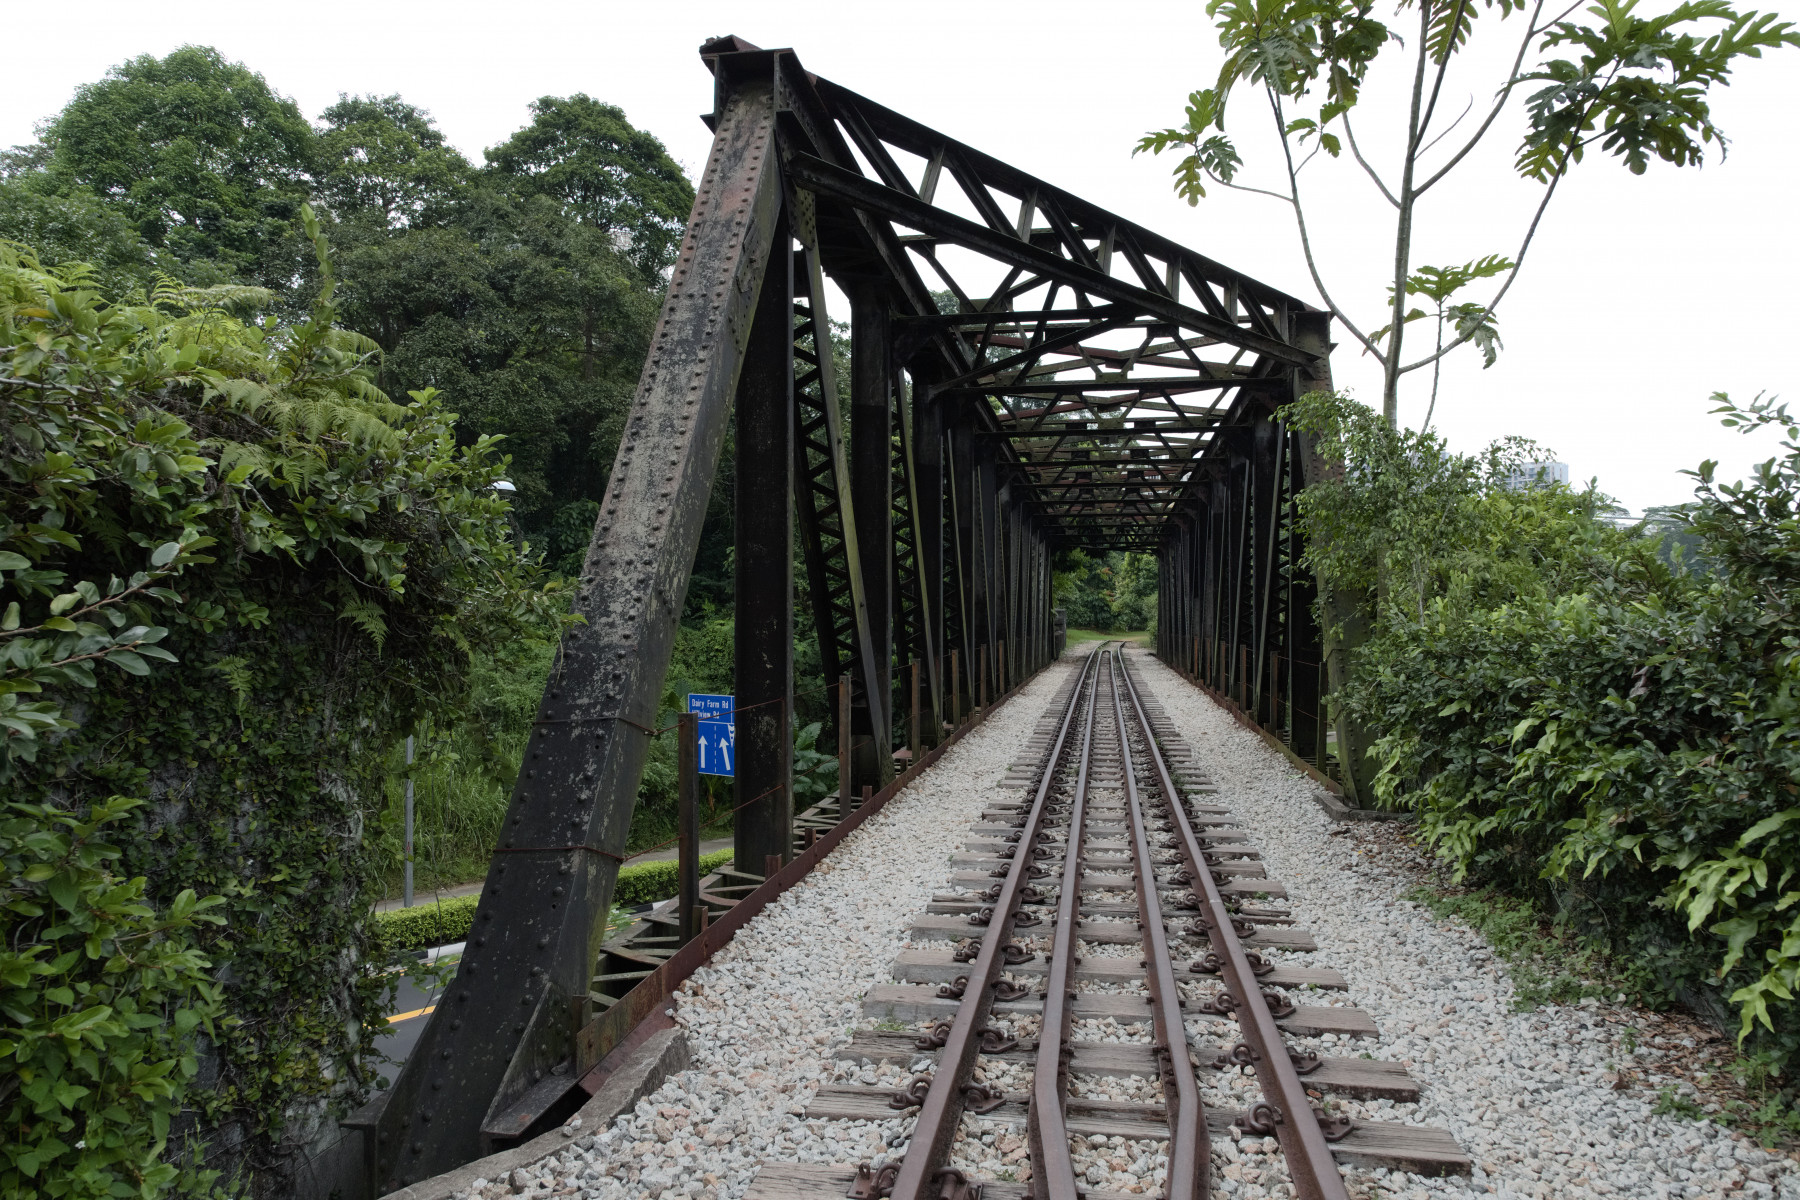 The bridge crossing Upper Bukit Timah Road